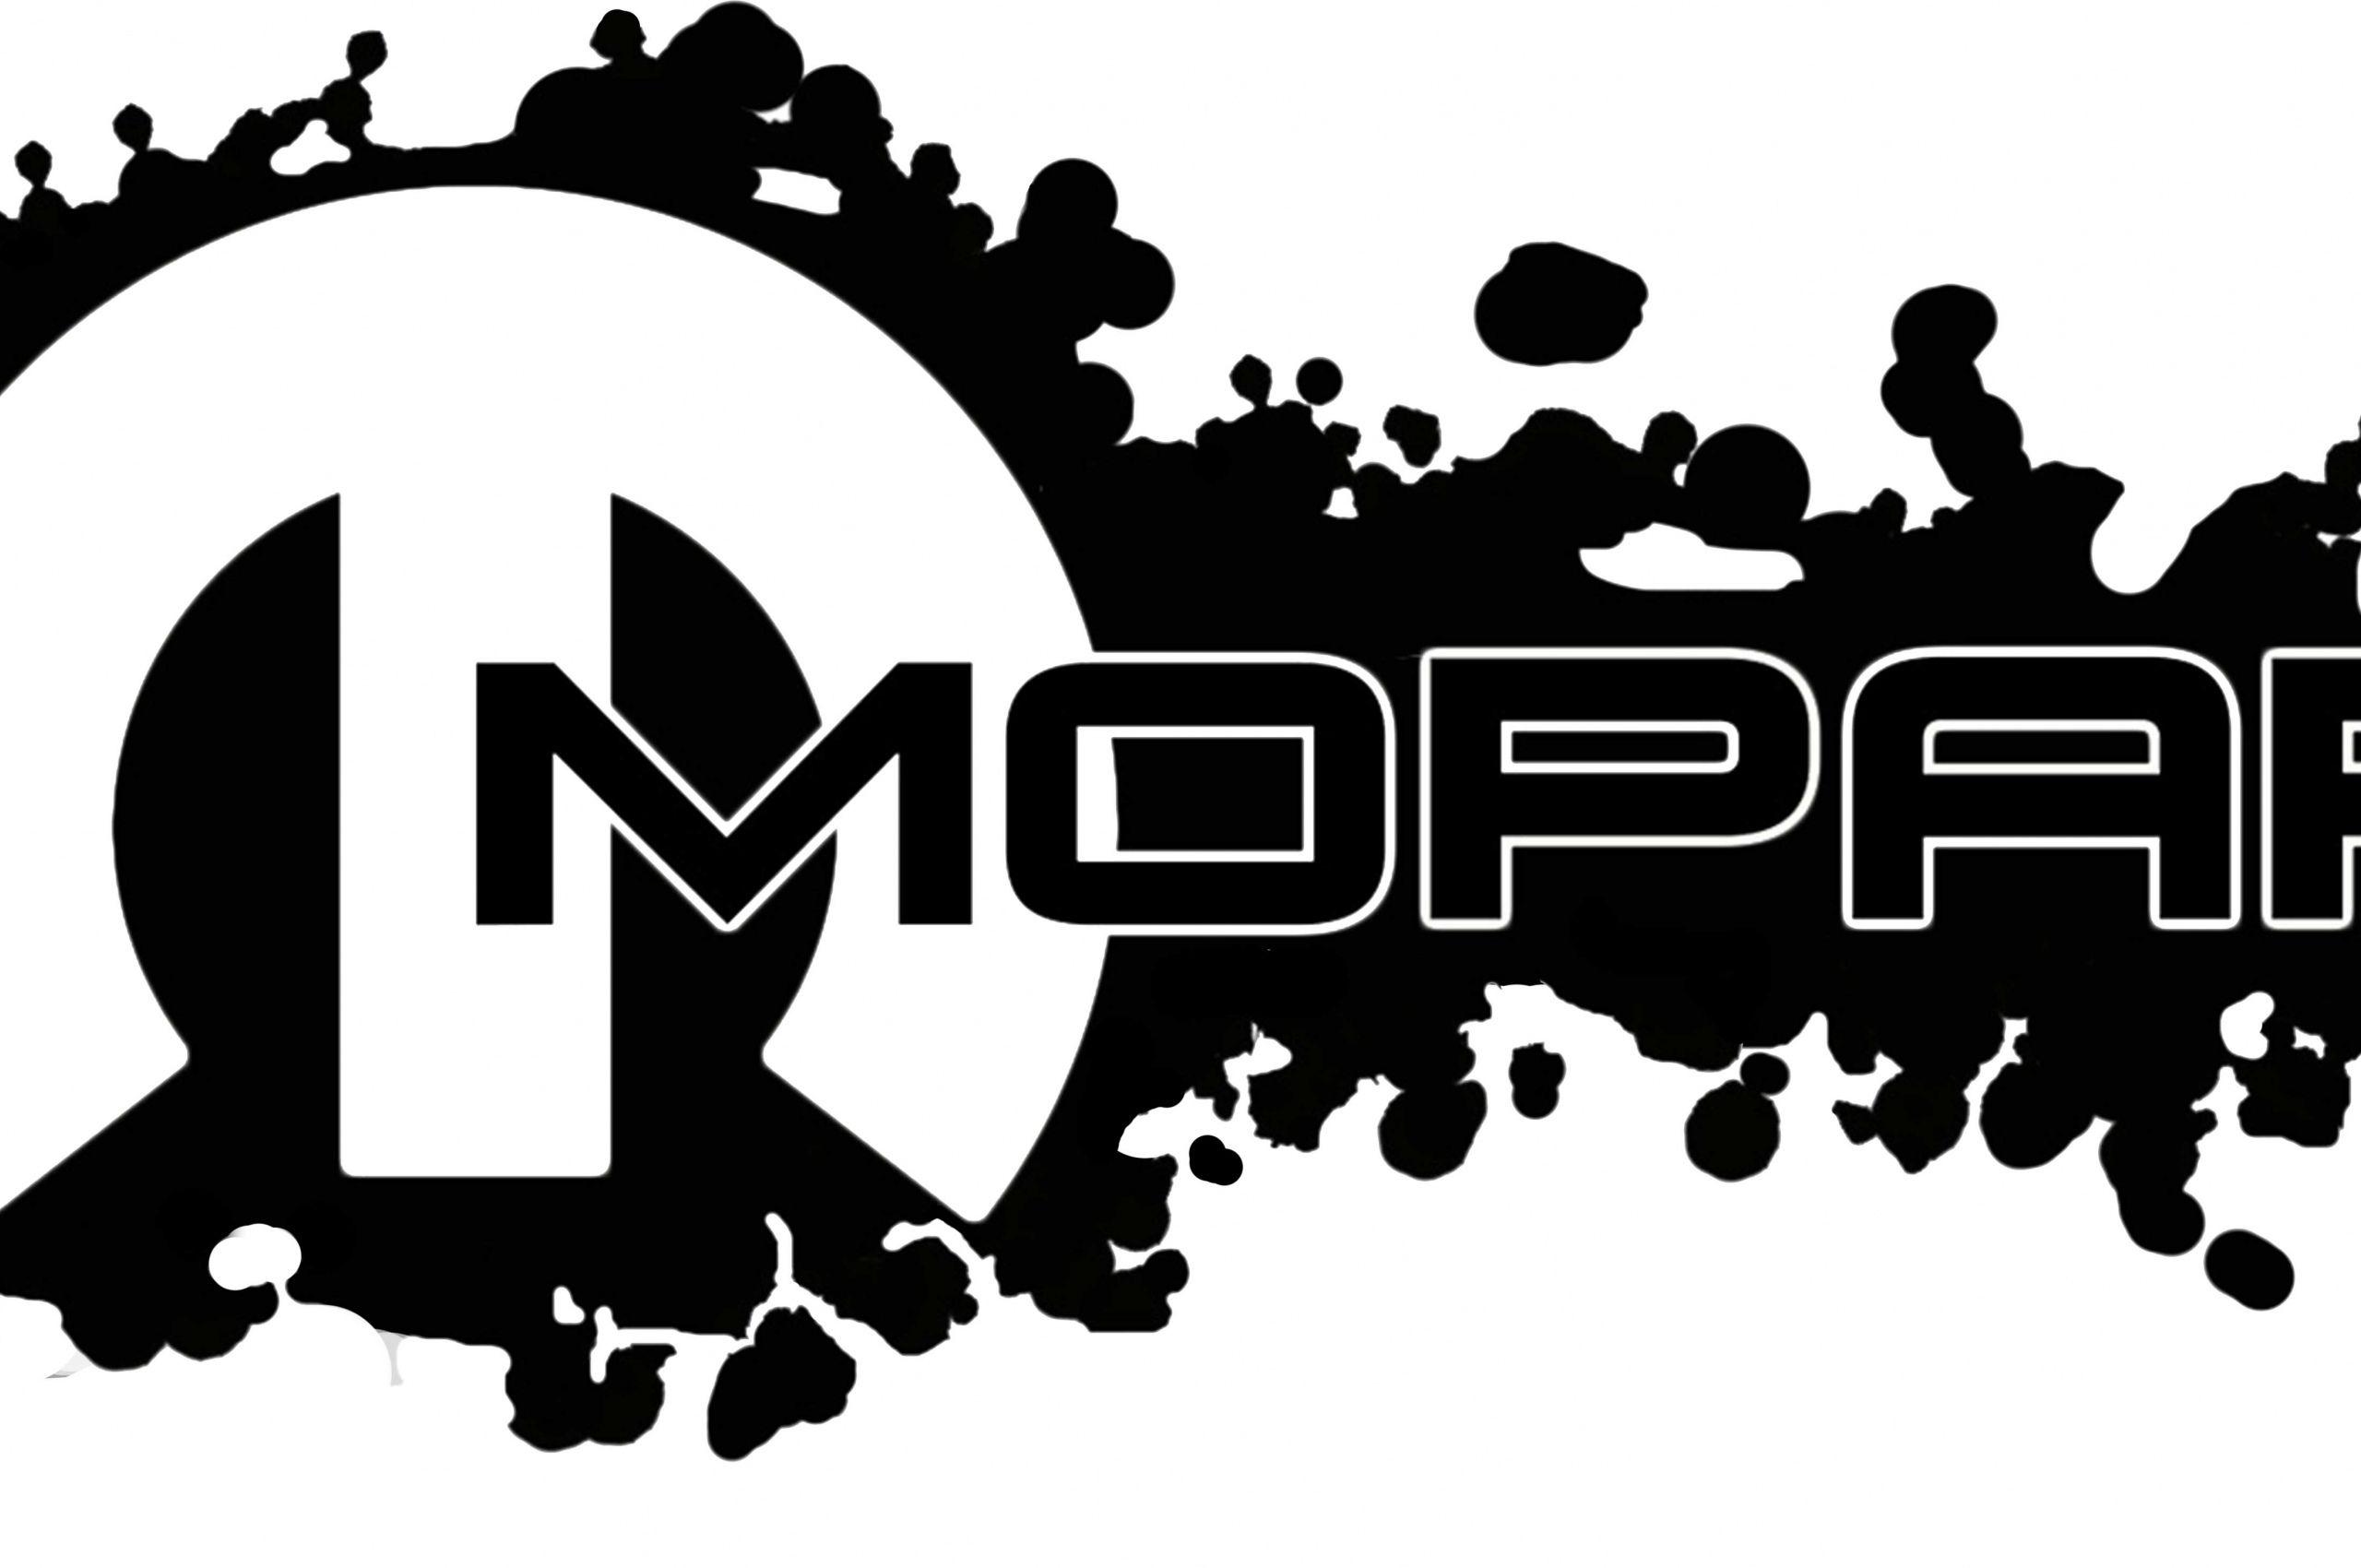 mopar logo background